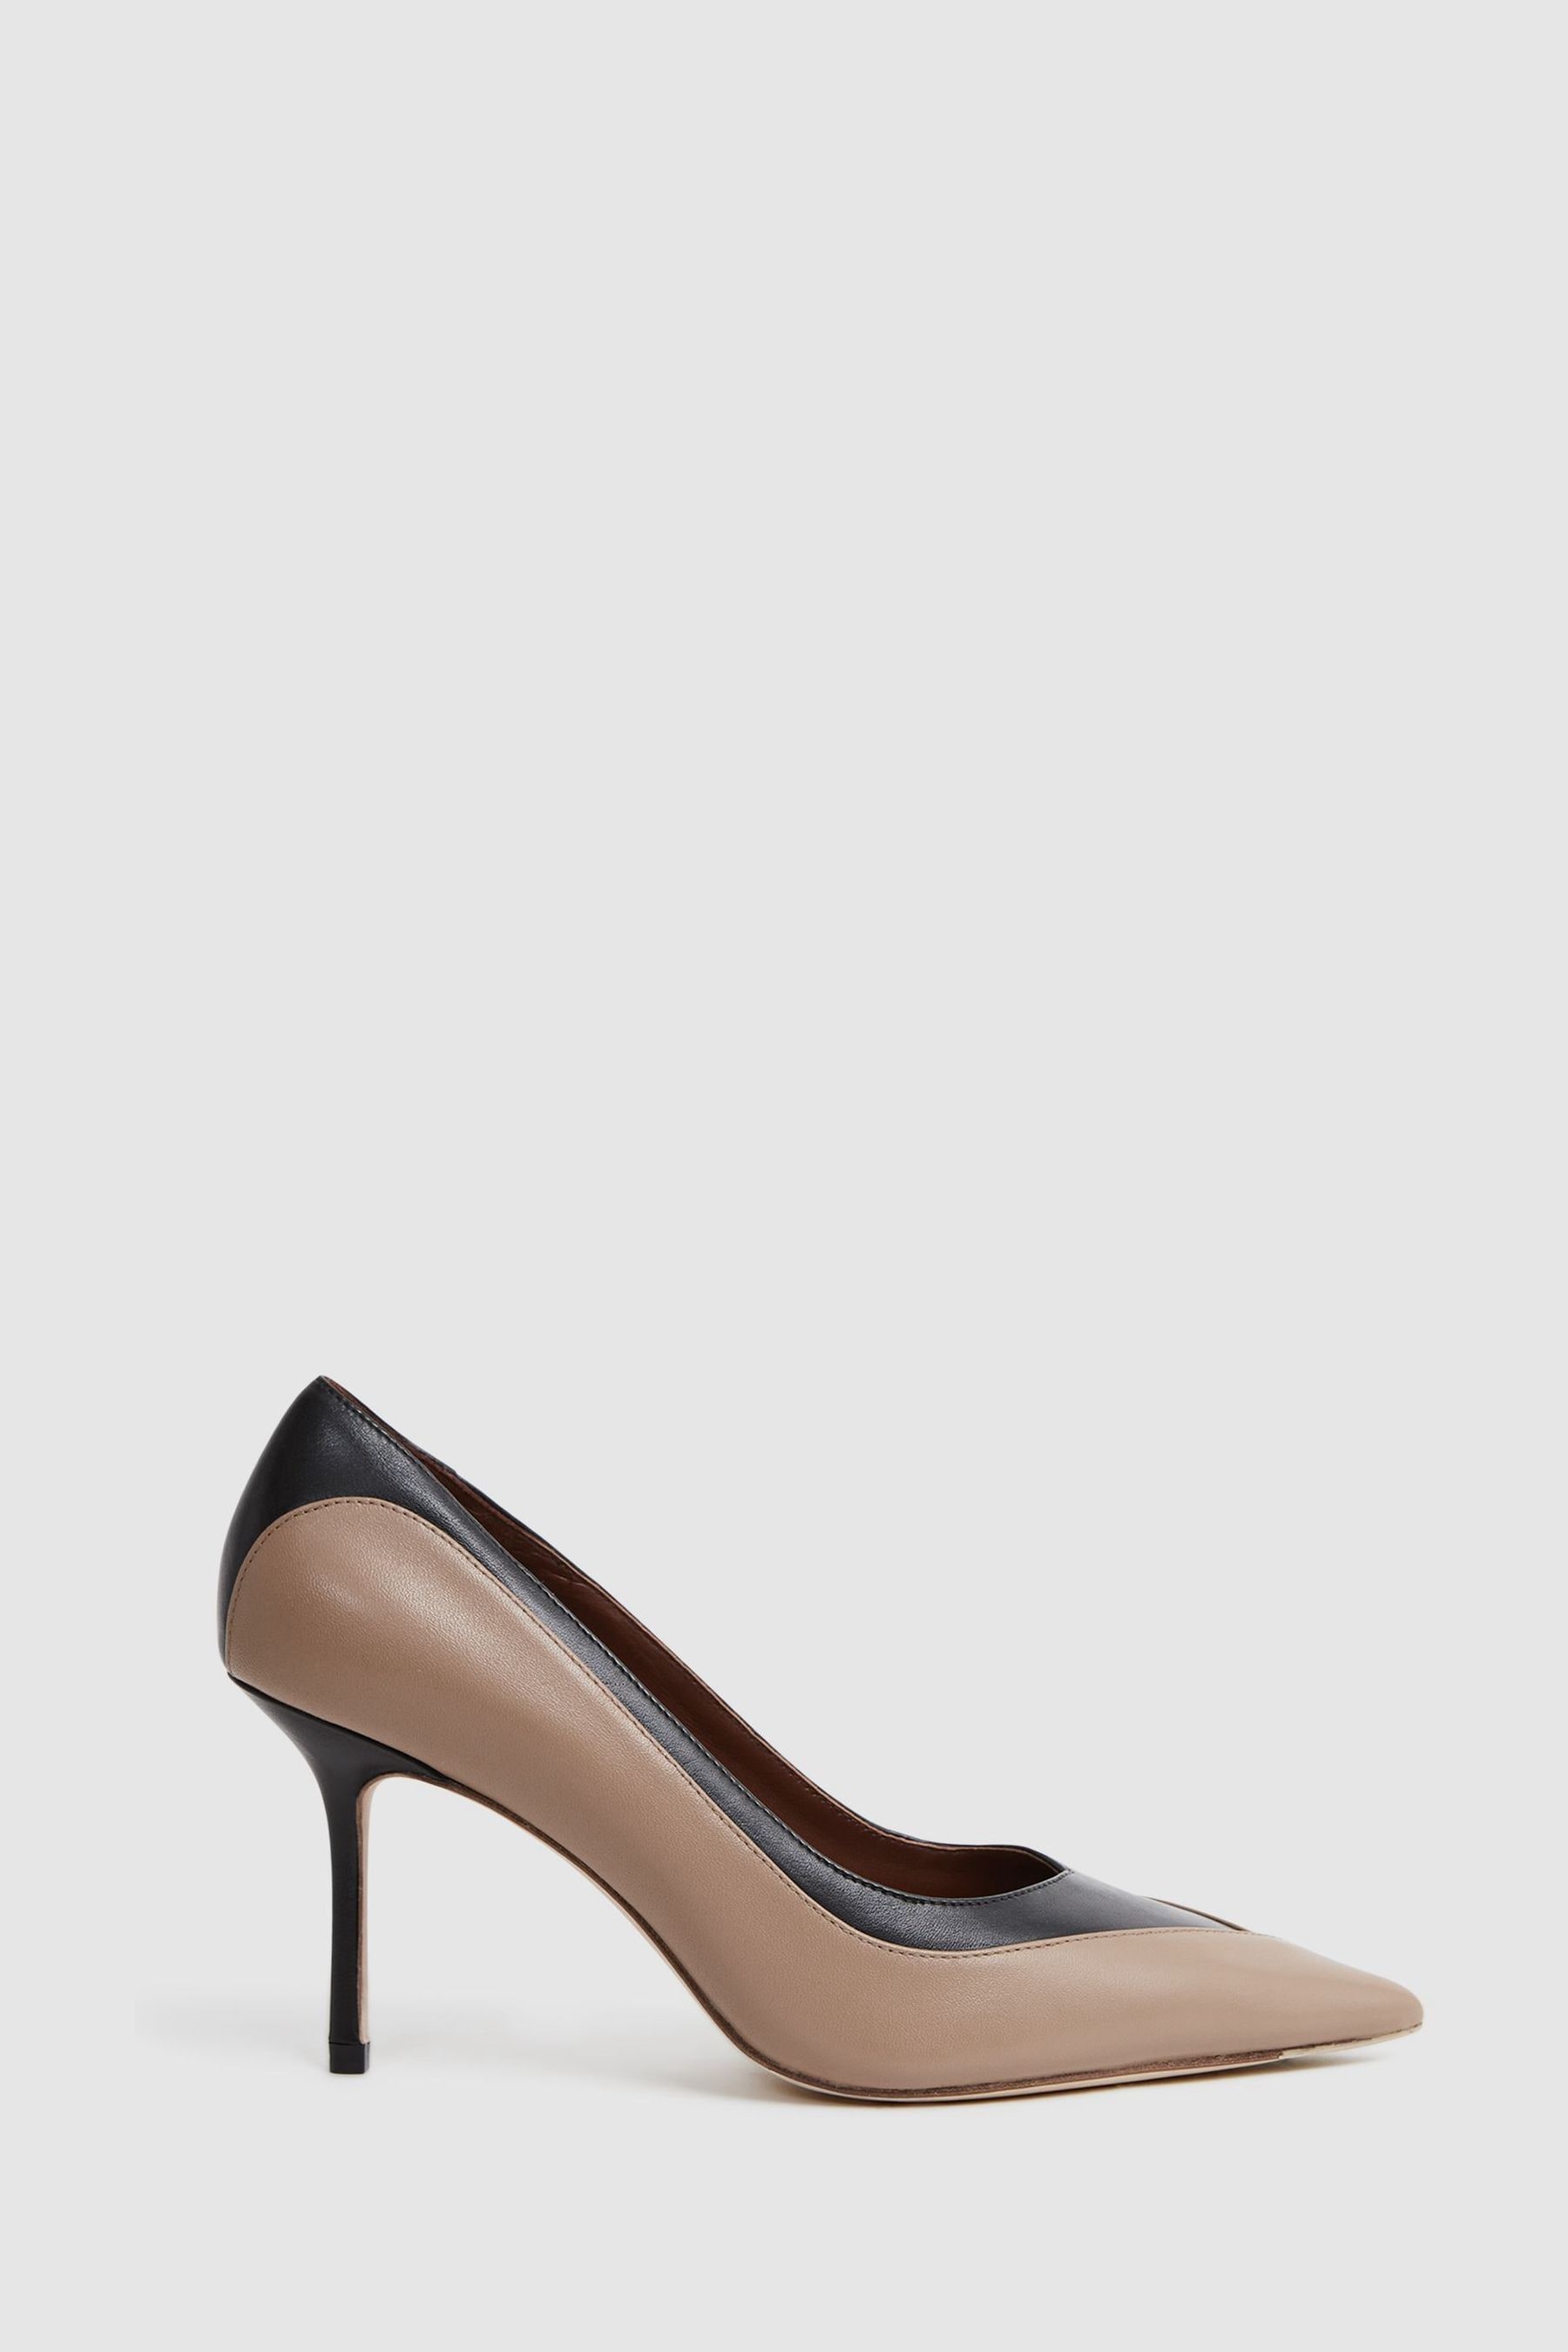 Reiss Gwyneth - Camel/black Leather Contrast Court Shoes, Uk 5 Eu 38